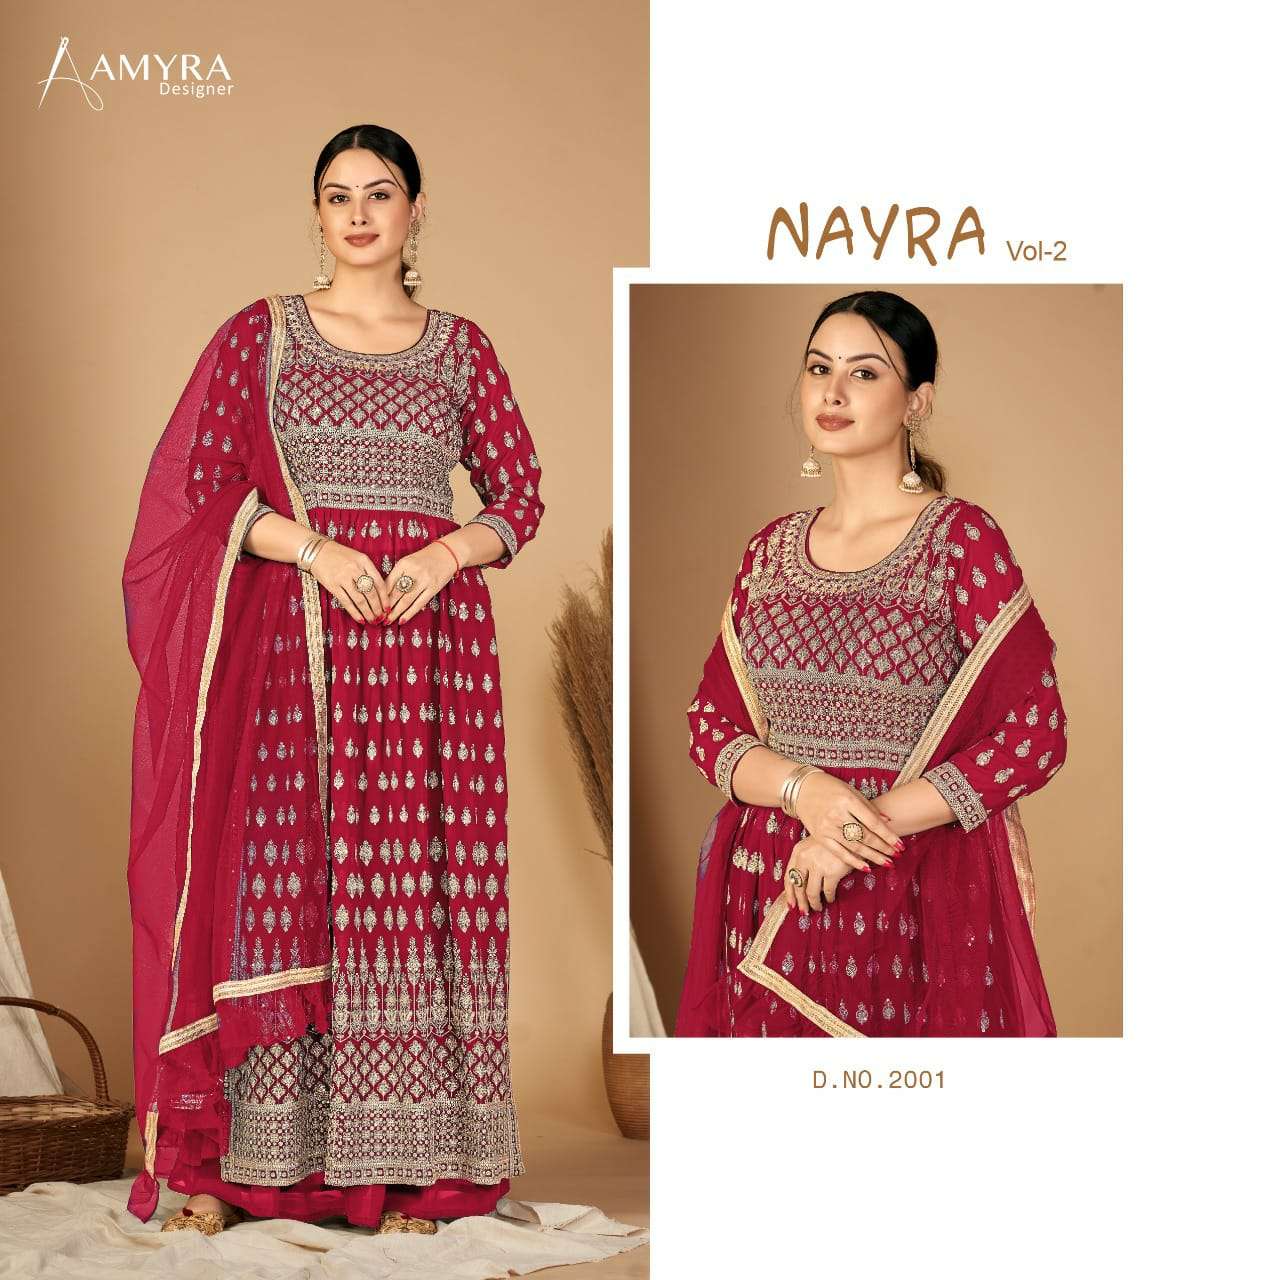 aamyra designer nyra vol-2 2001-2004 series exclusive blooming georgette party wear salwar suits best price at surat 